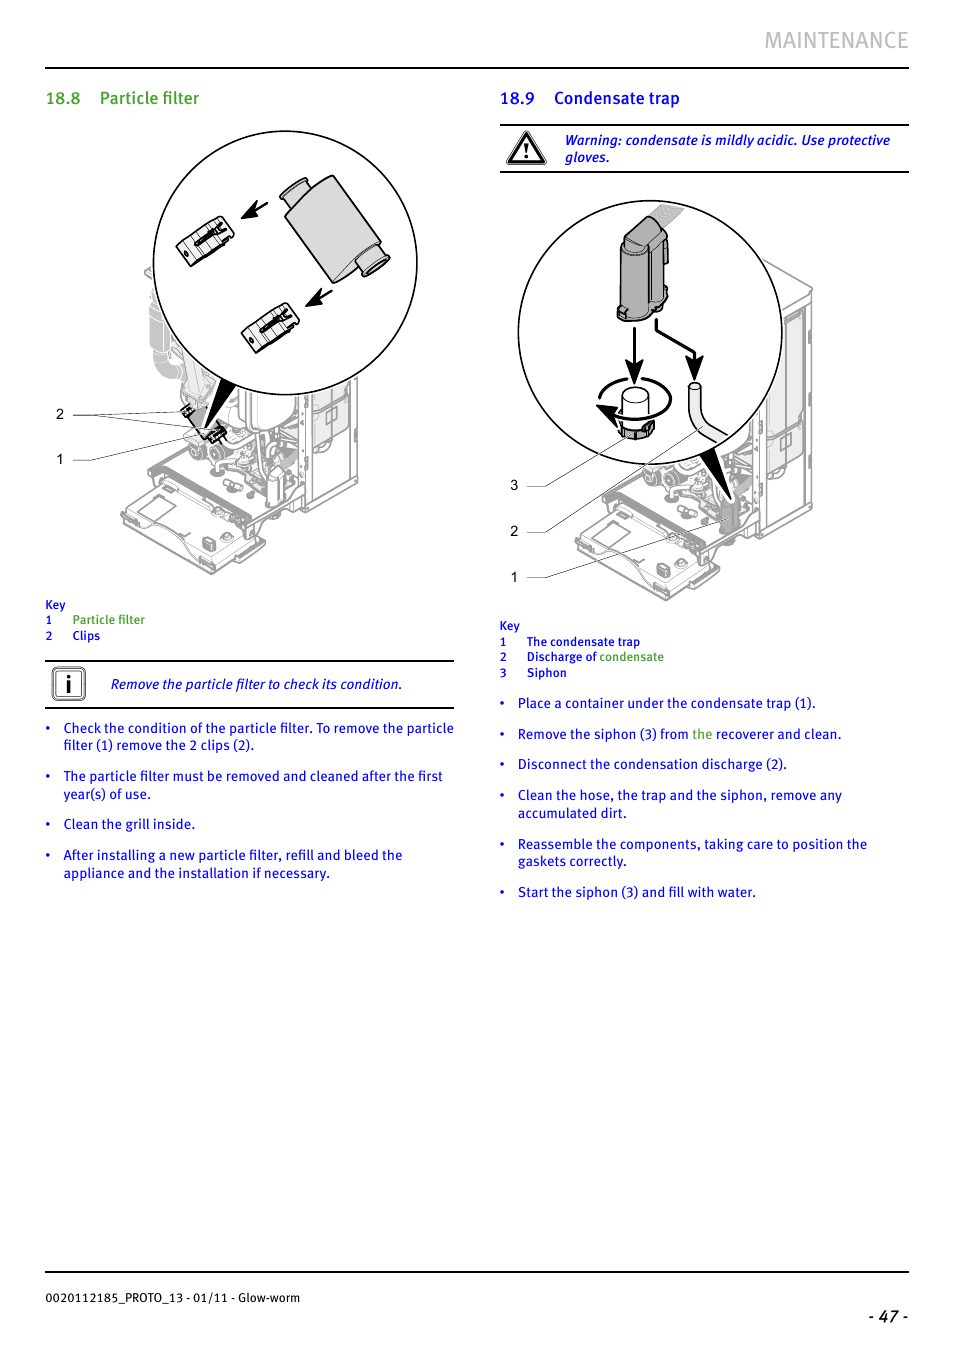 Maintenance | Glow-worm Ultracom2 35 Store User Manual | Page 49 / 68